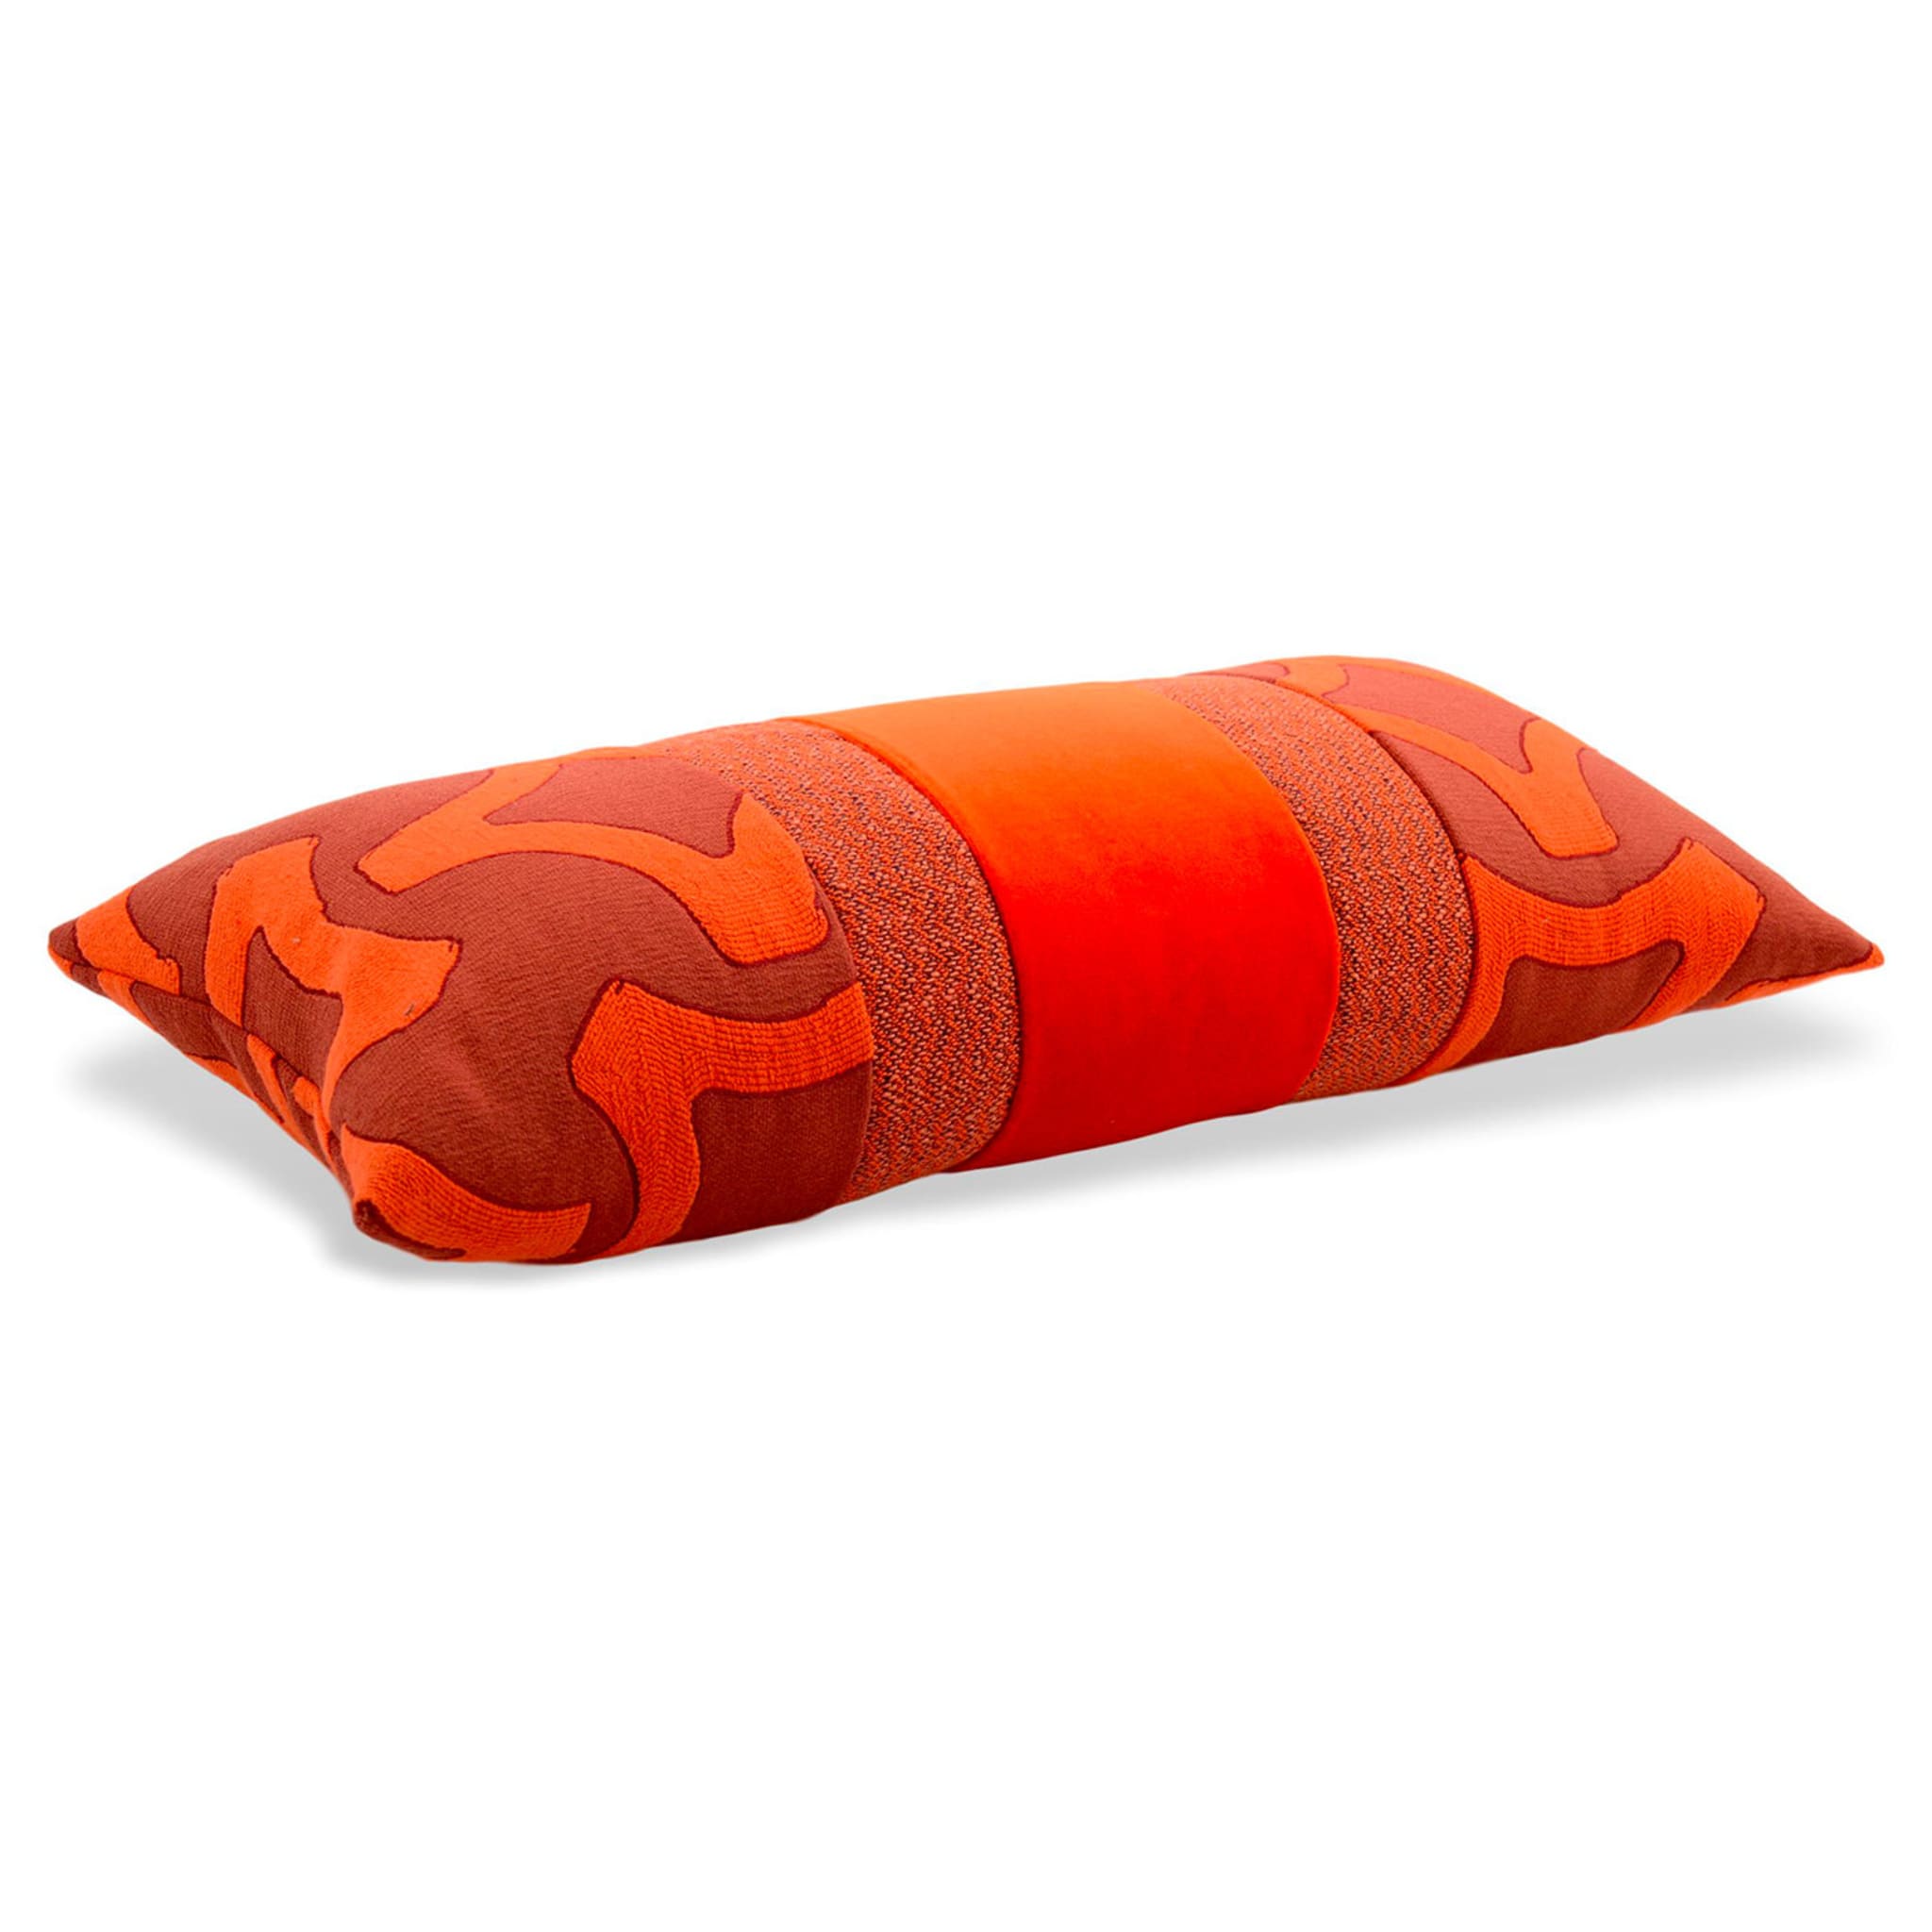 Rectangular Nastro Cushion in jacquard fabric and orange cotton velvet - Alternative view 1